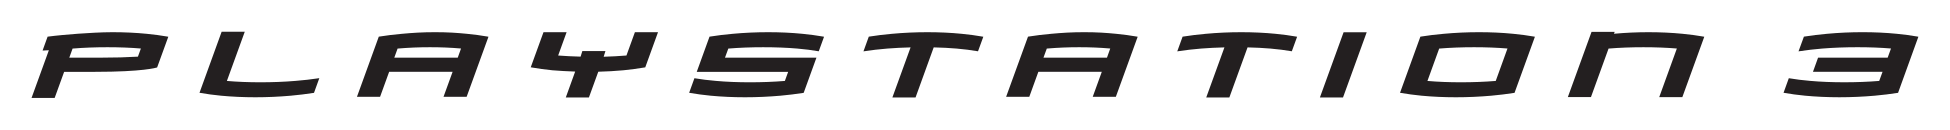 PlayStation 3 "Spider Man" logotype (2006-2009).